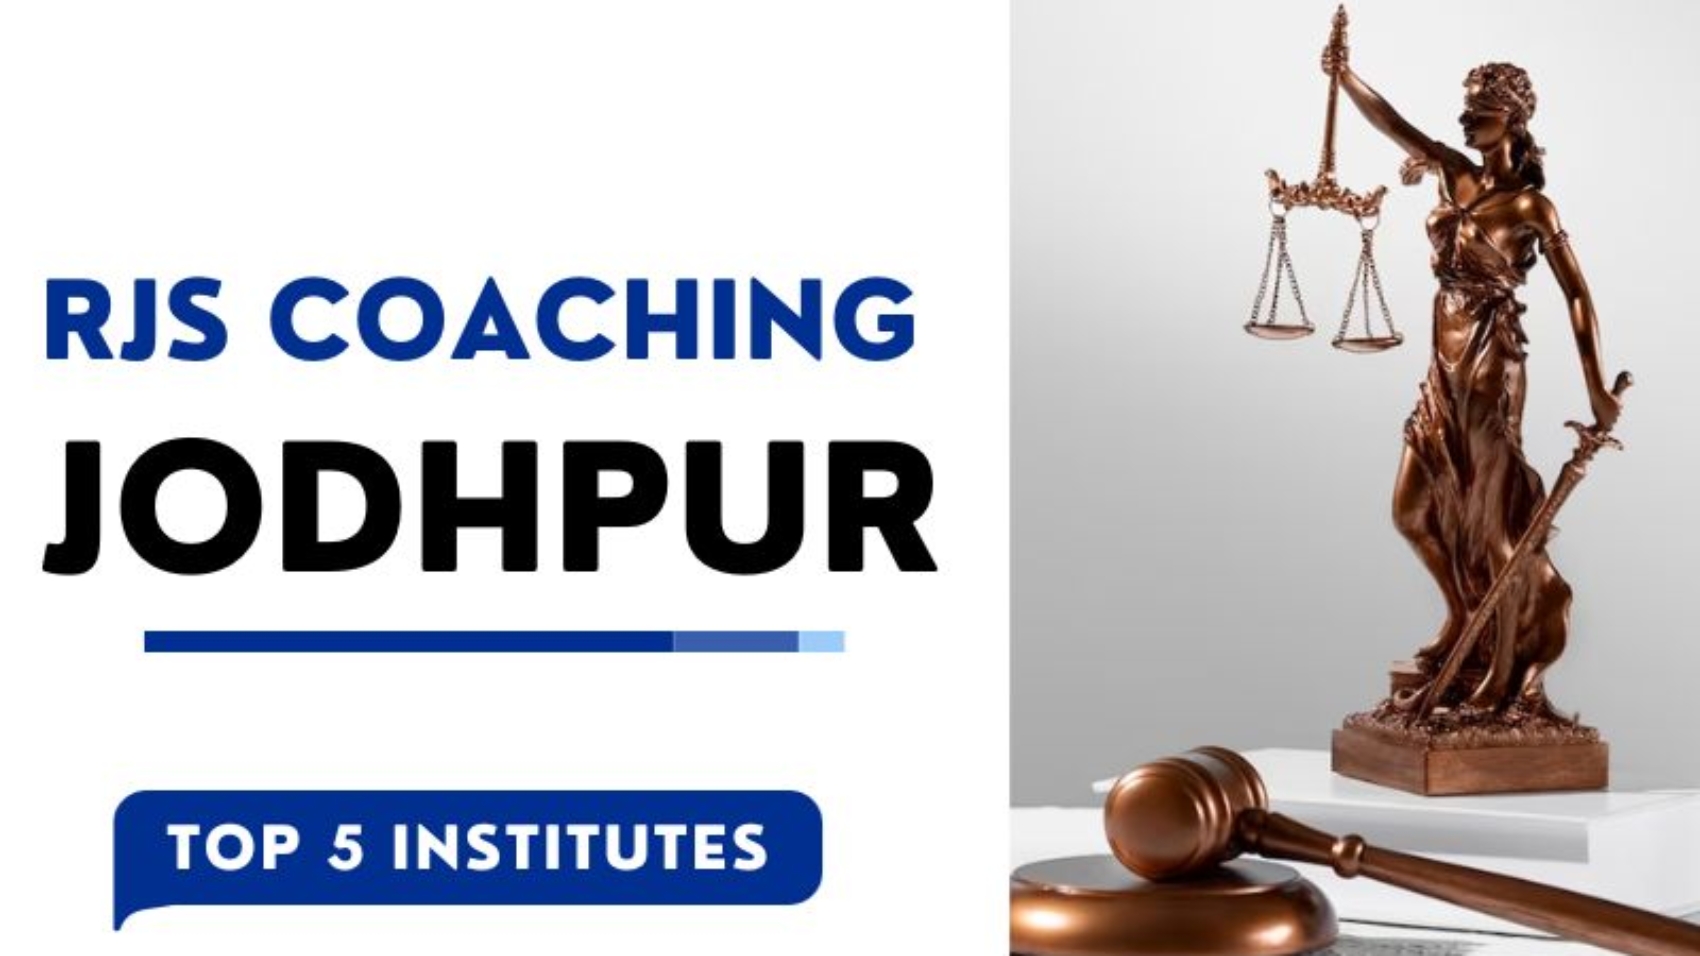 rjs coaching jodhpur